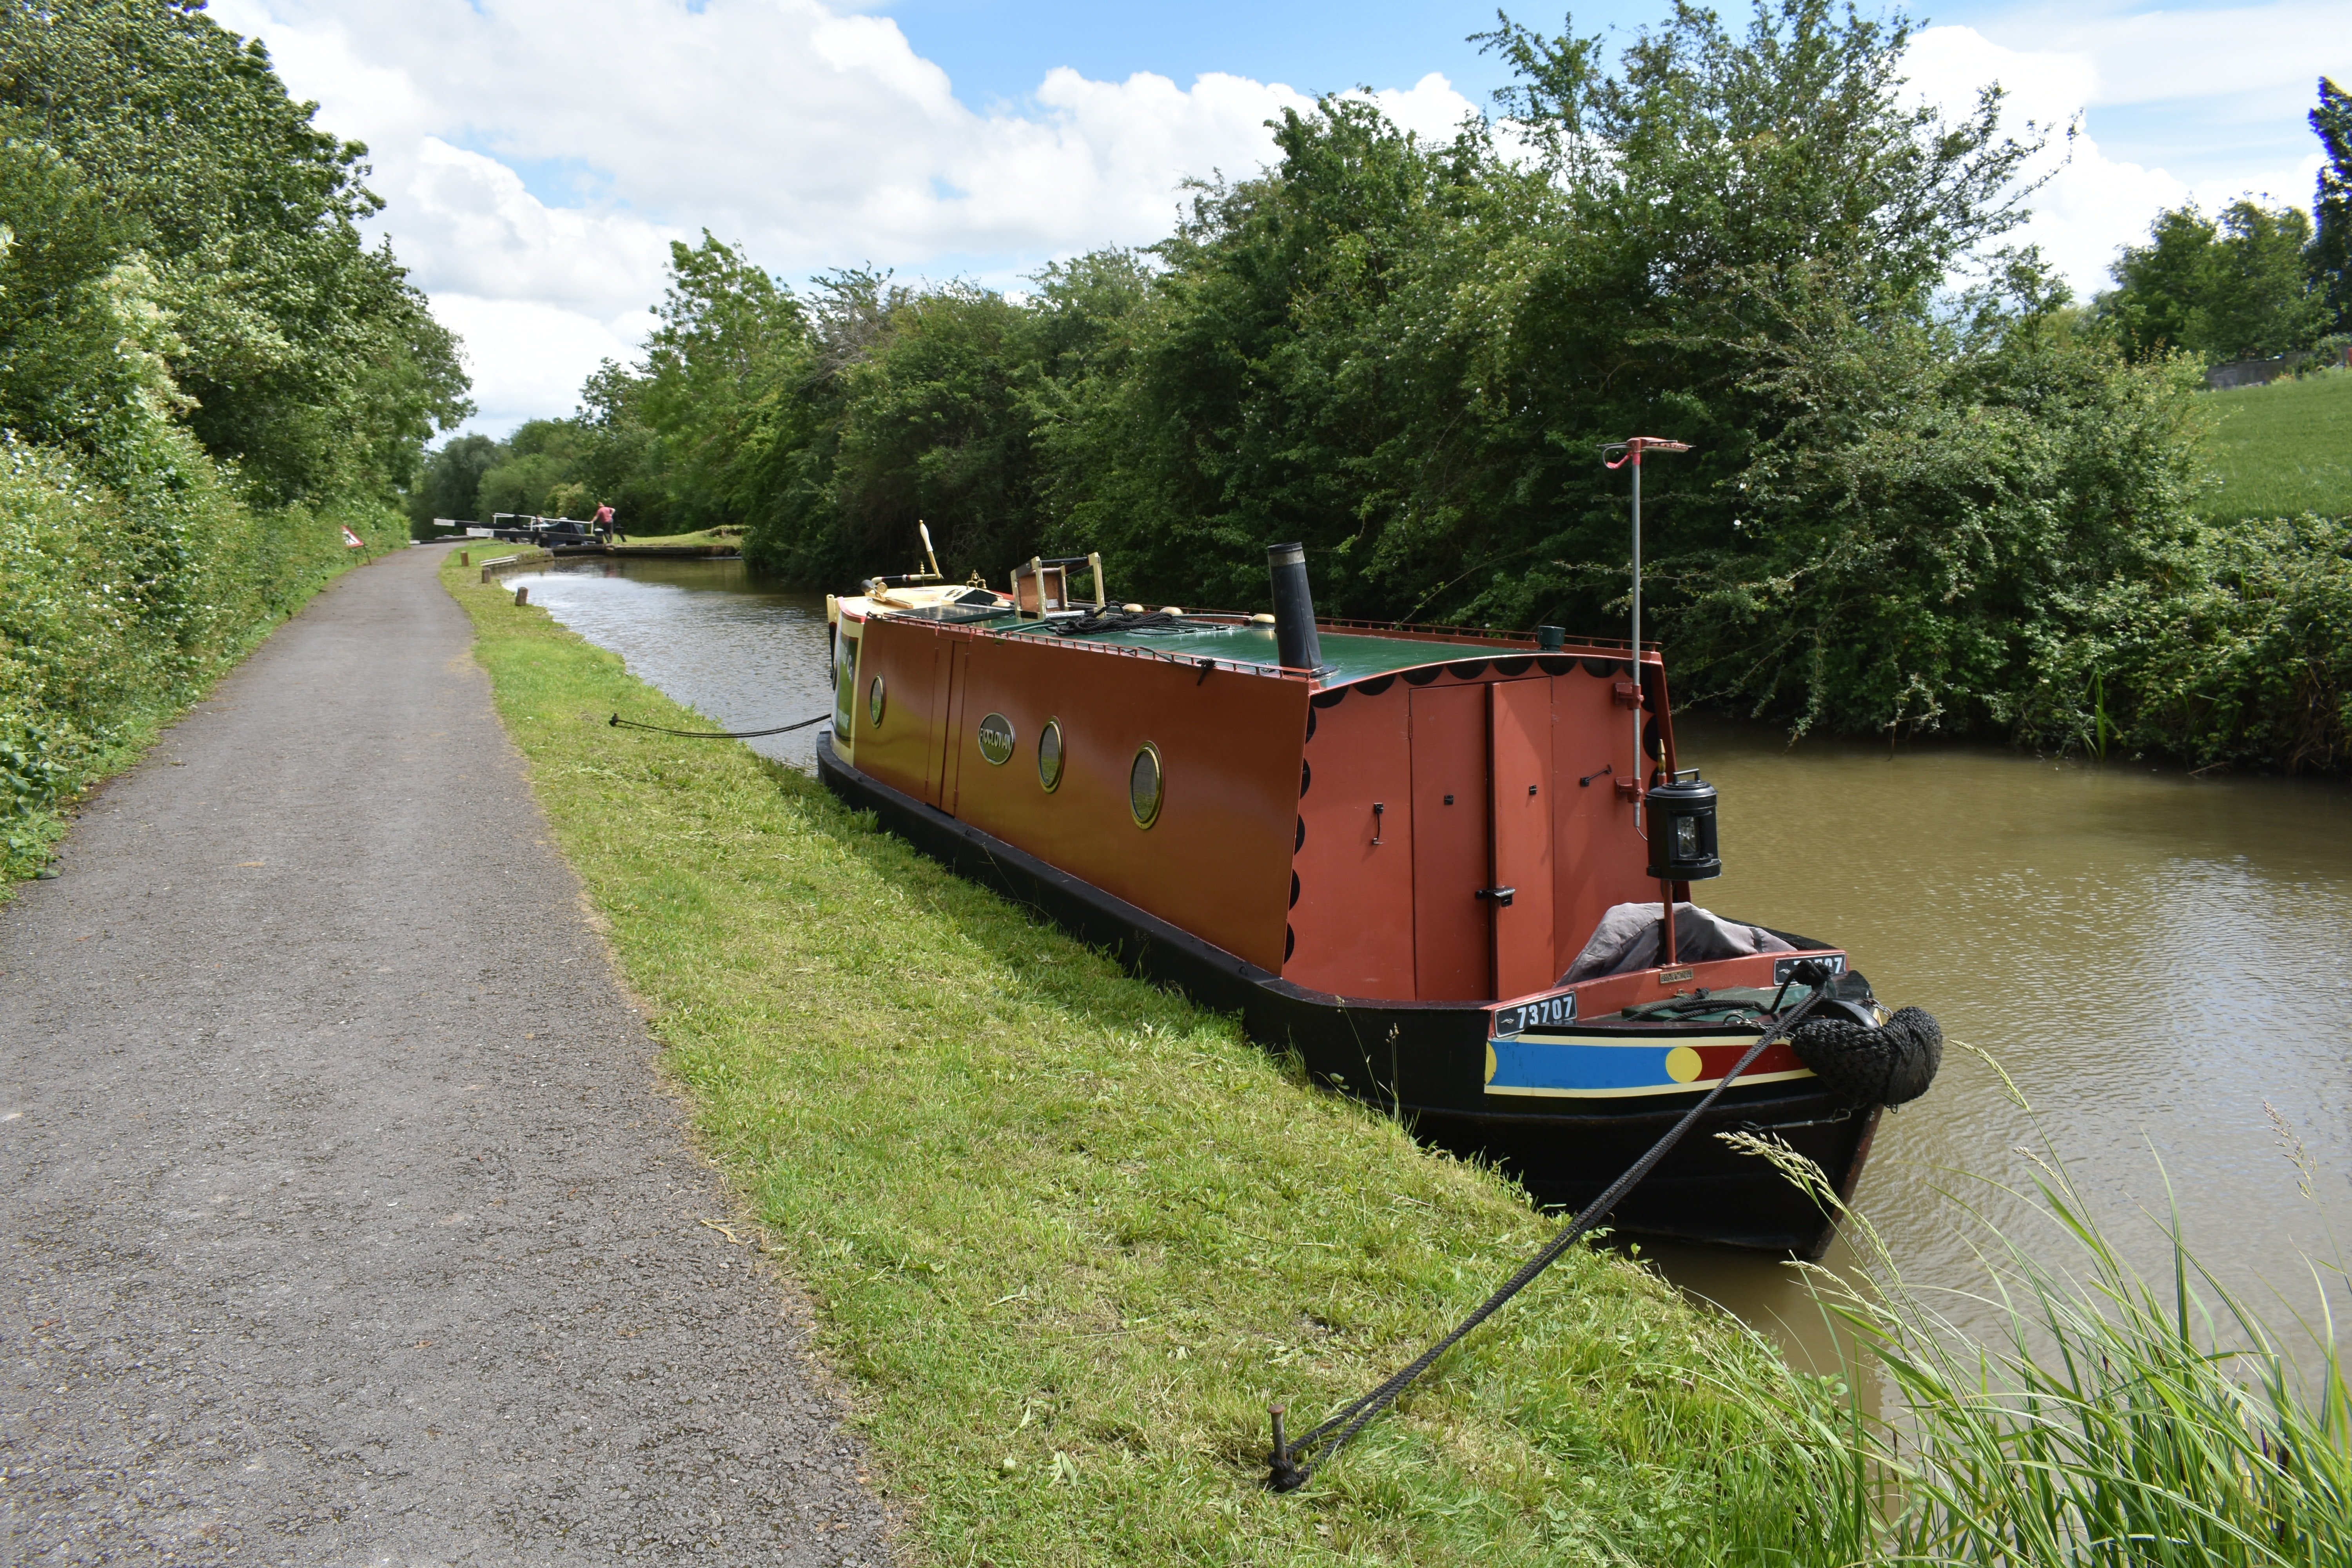 narrowboat on canal